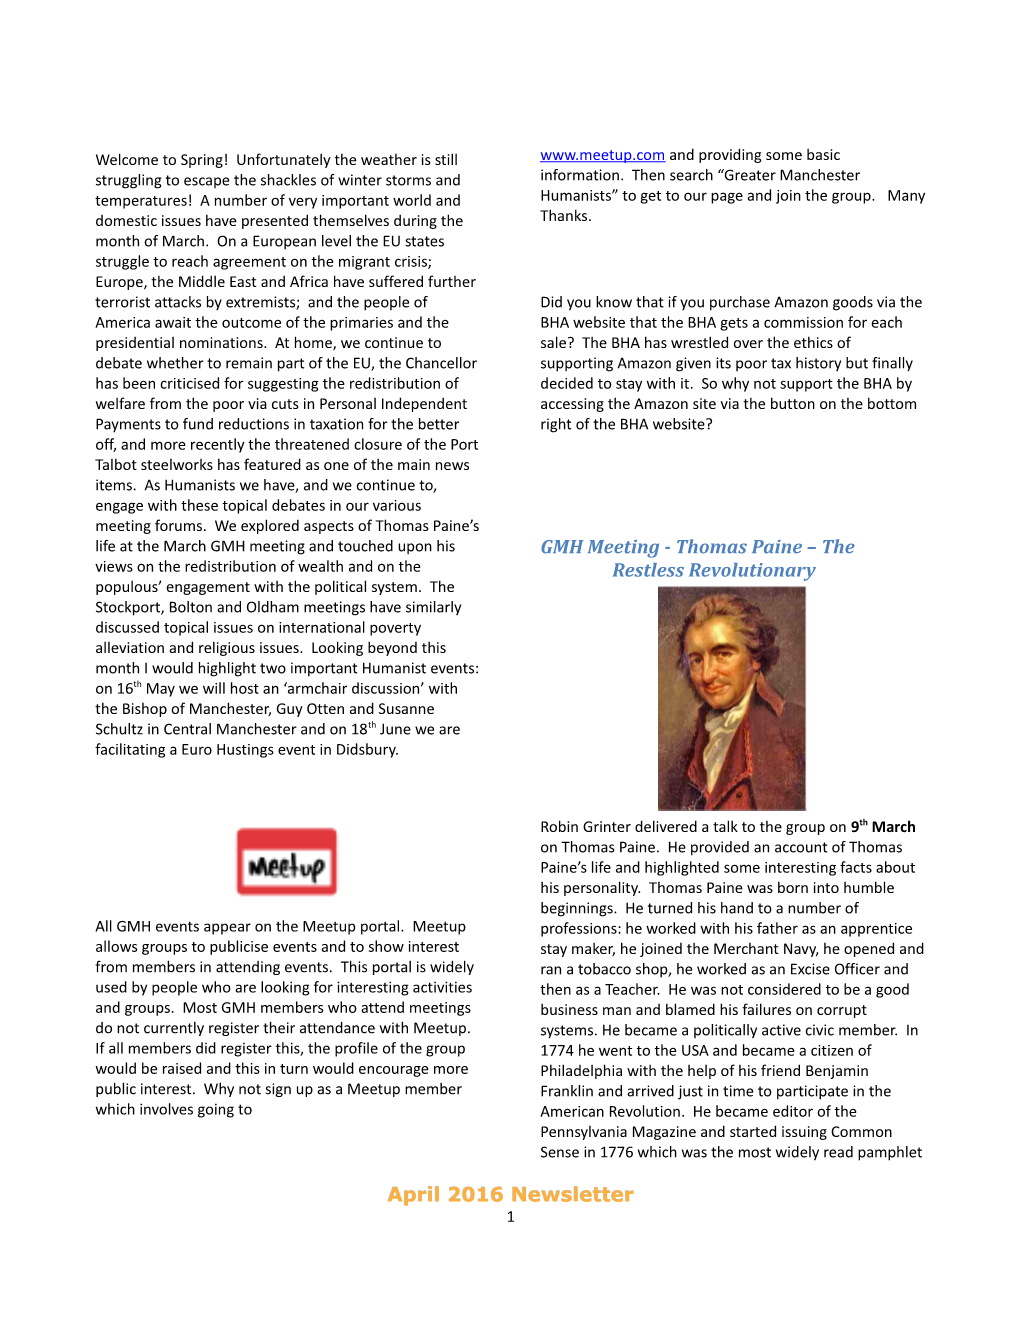 GMH Meeting - Thomas Paine the Restless Revolutionary